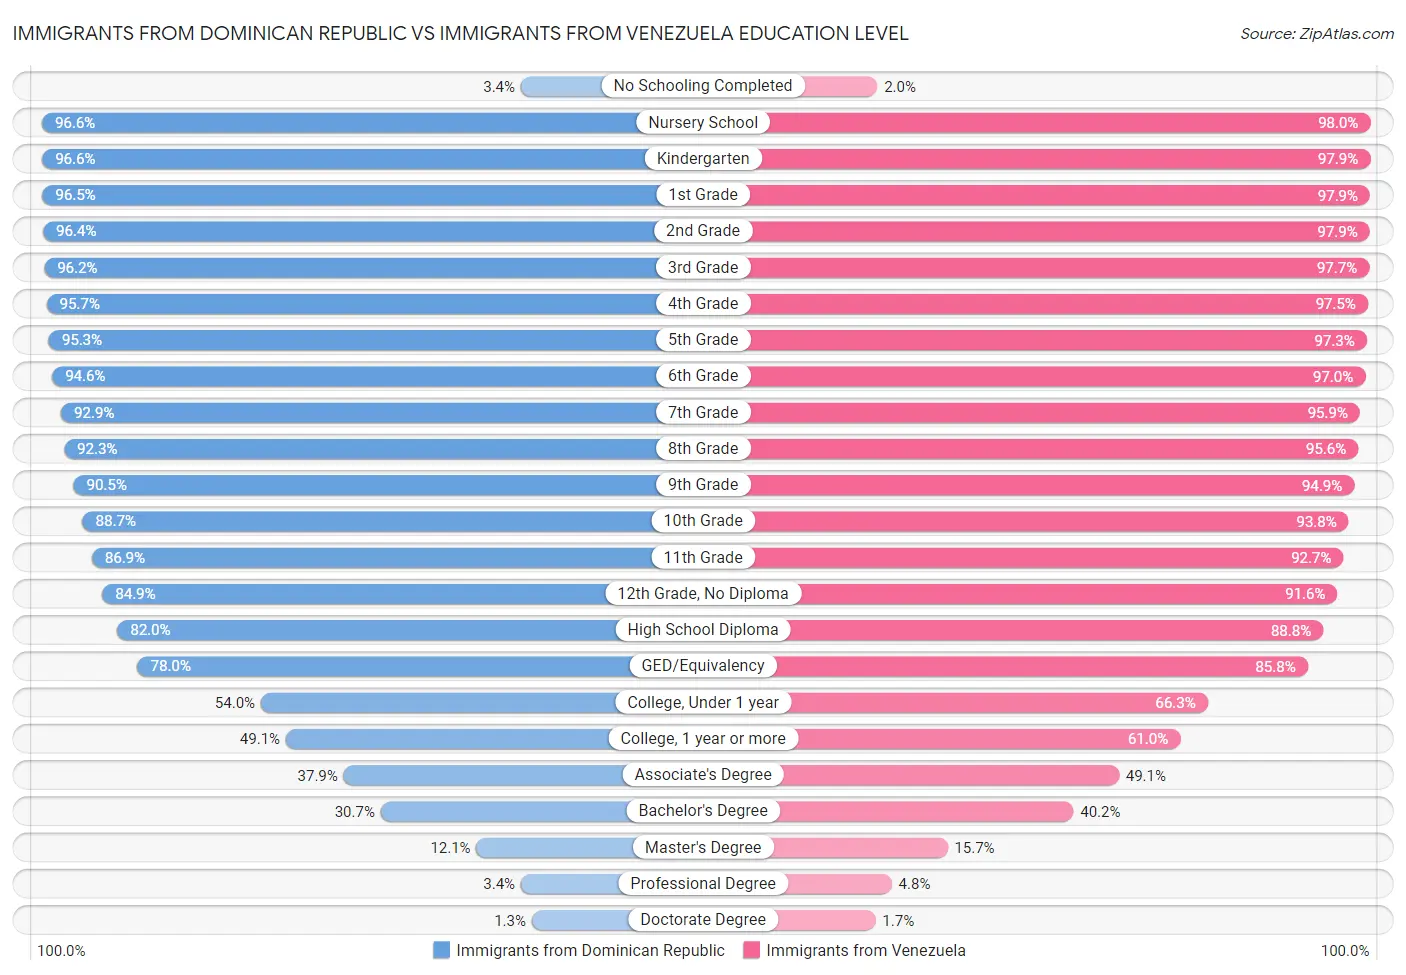 Immigrants from Dominican Republic vs Immigrants from Venezuela Education Level